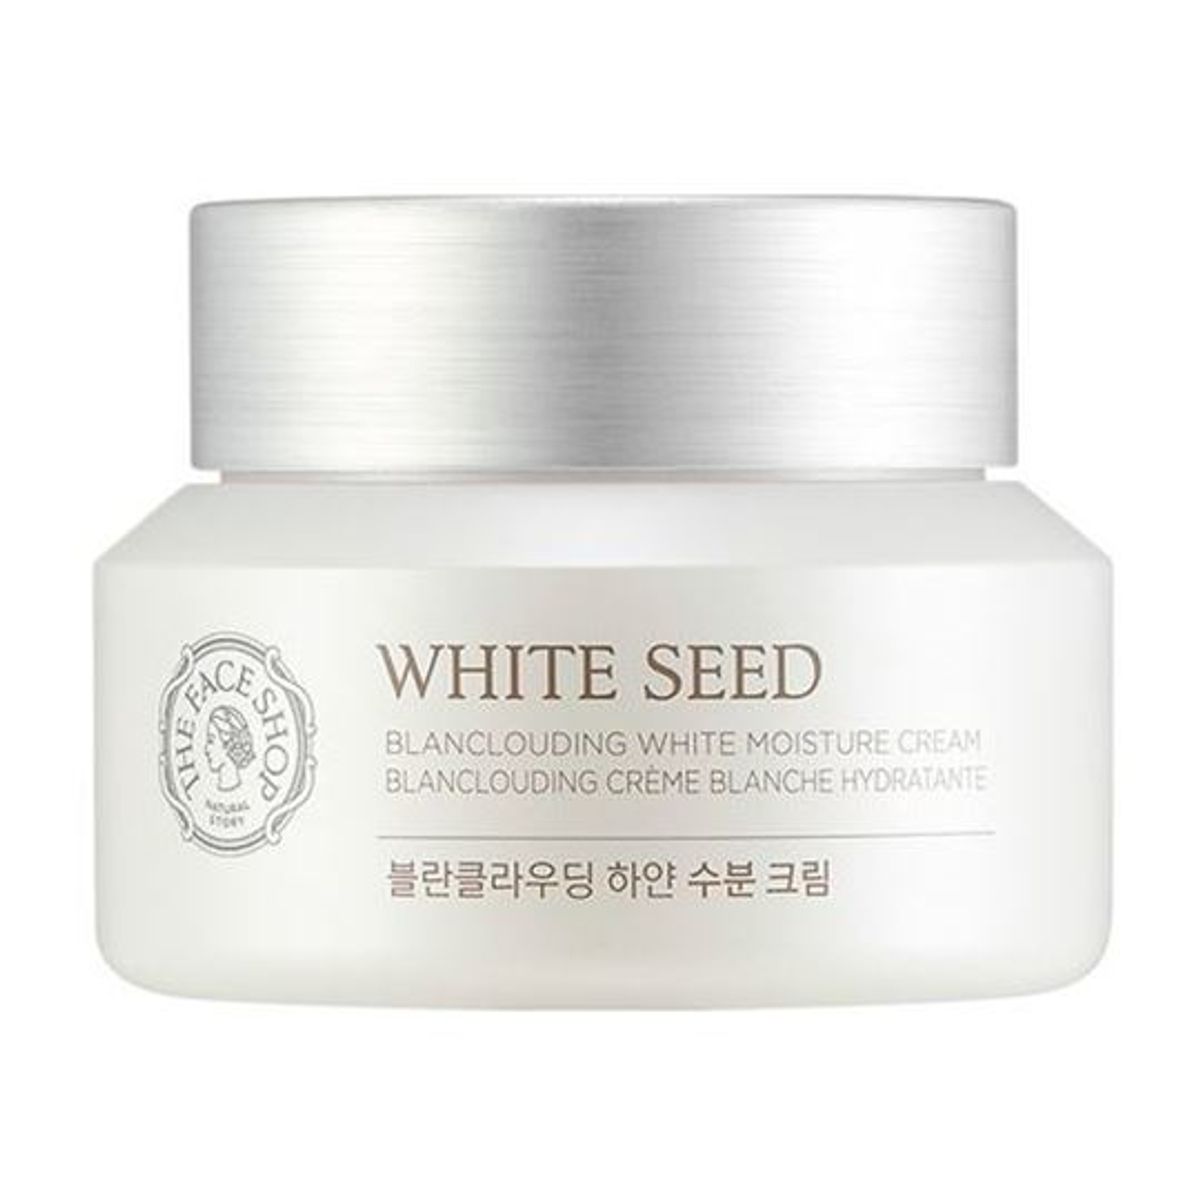 kem-duong-giup-da-trang-sang-white-seed-blanclouding-moisture-cream-50ml-1